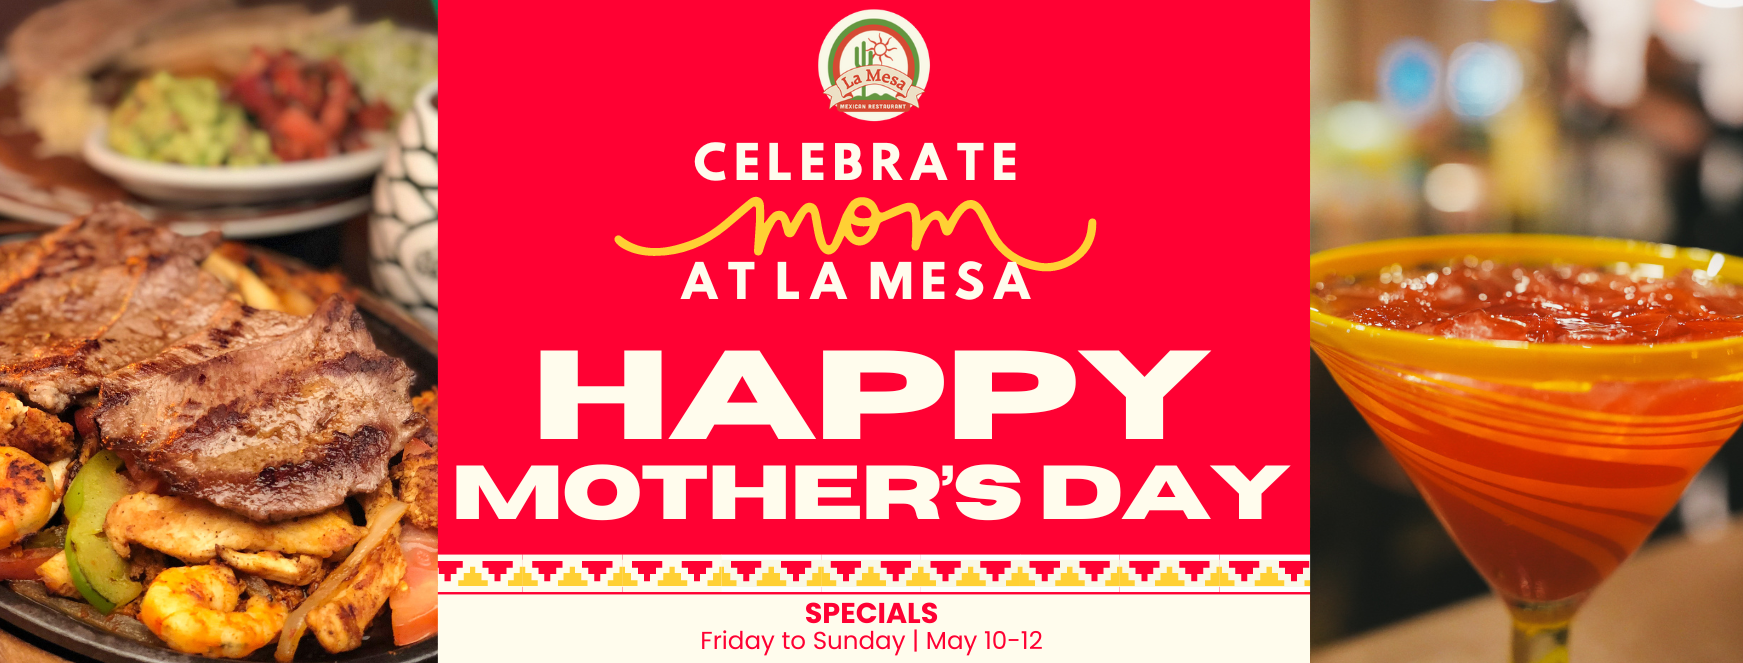 La Mesa Mexican restaurant - Mother's Day